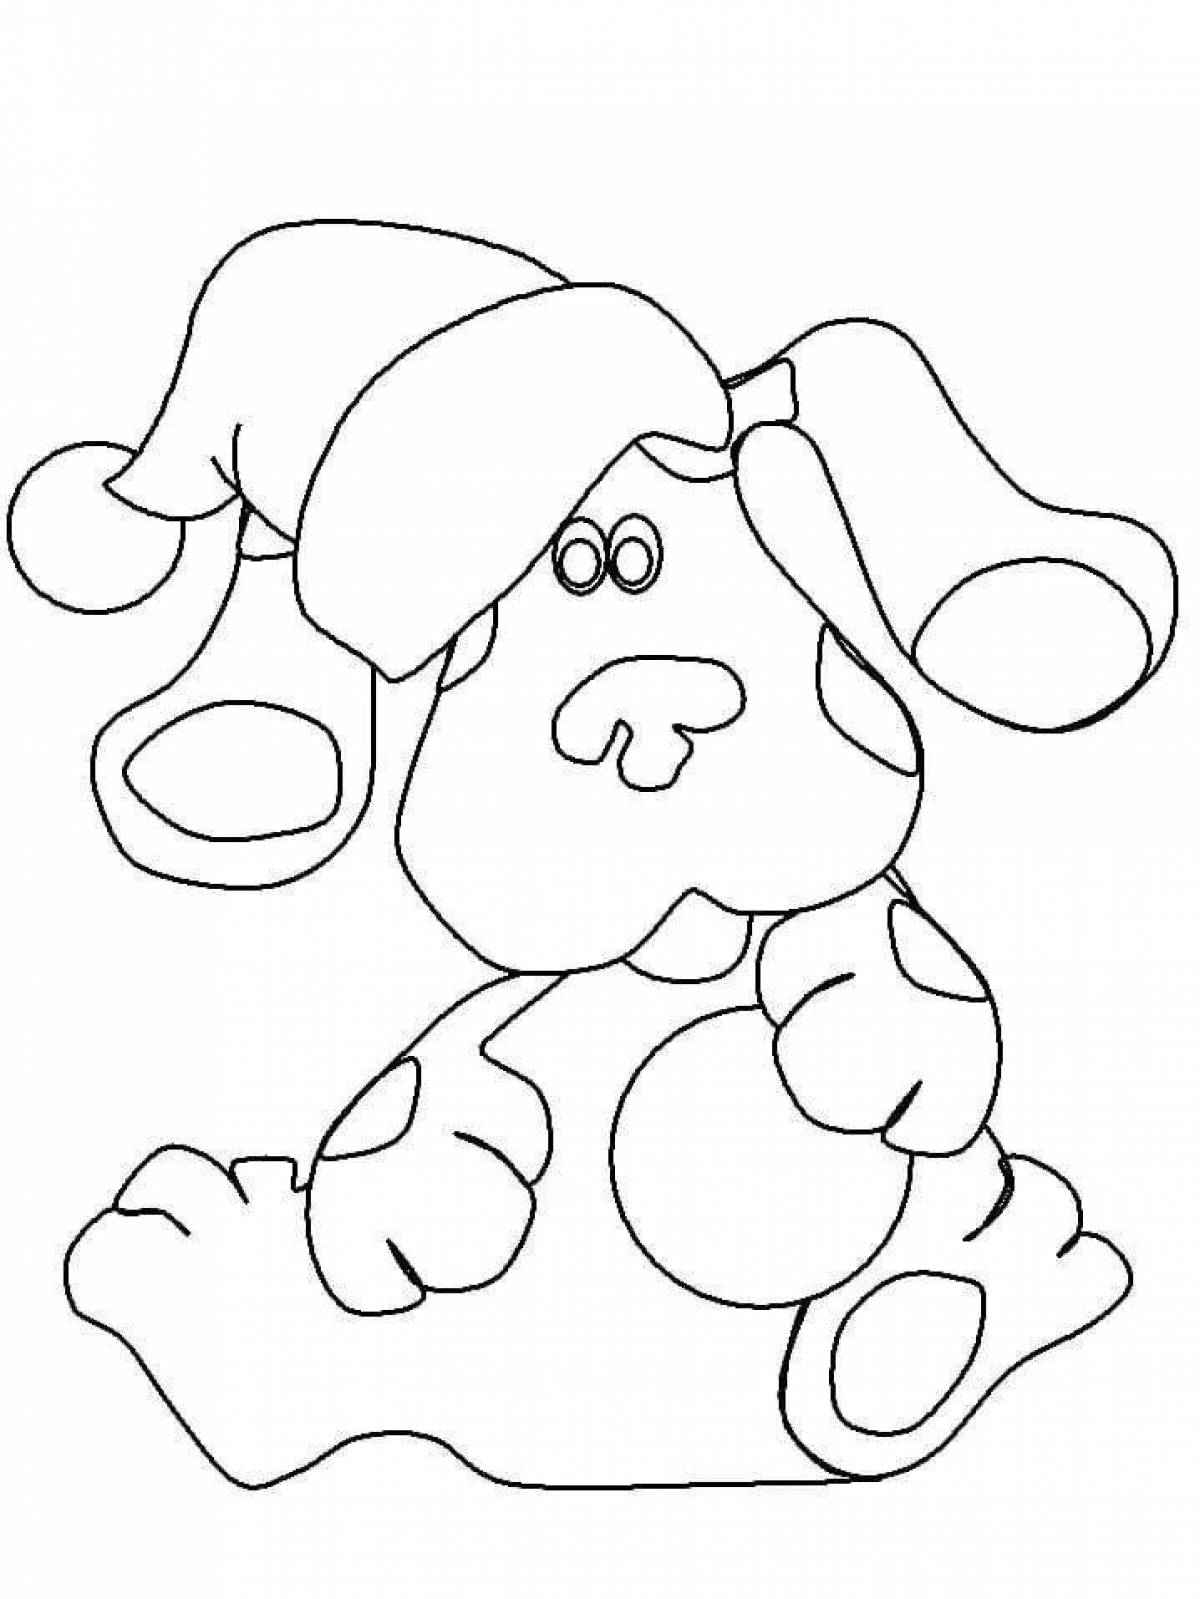 Fabulous dog Christmas coloring book